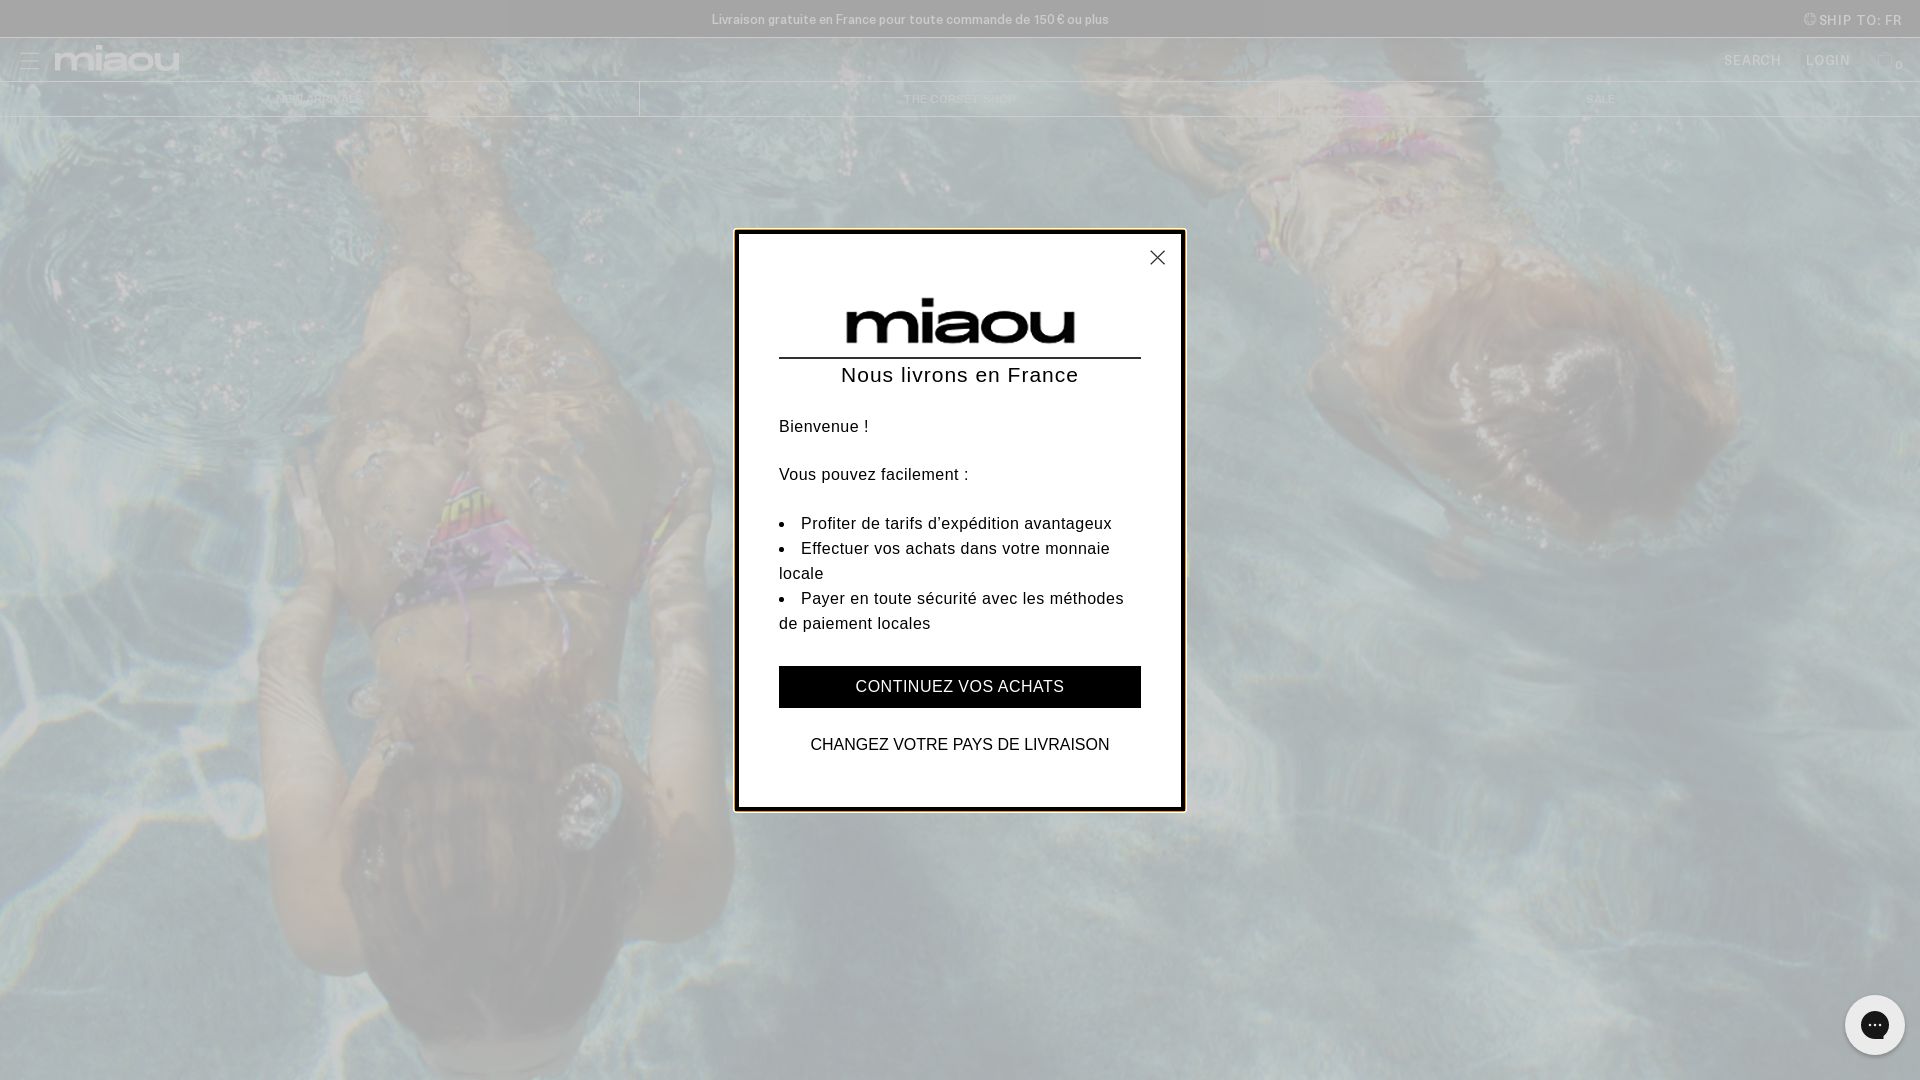 Website status miaou.com is   ONLINE